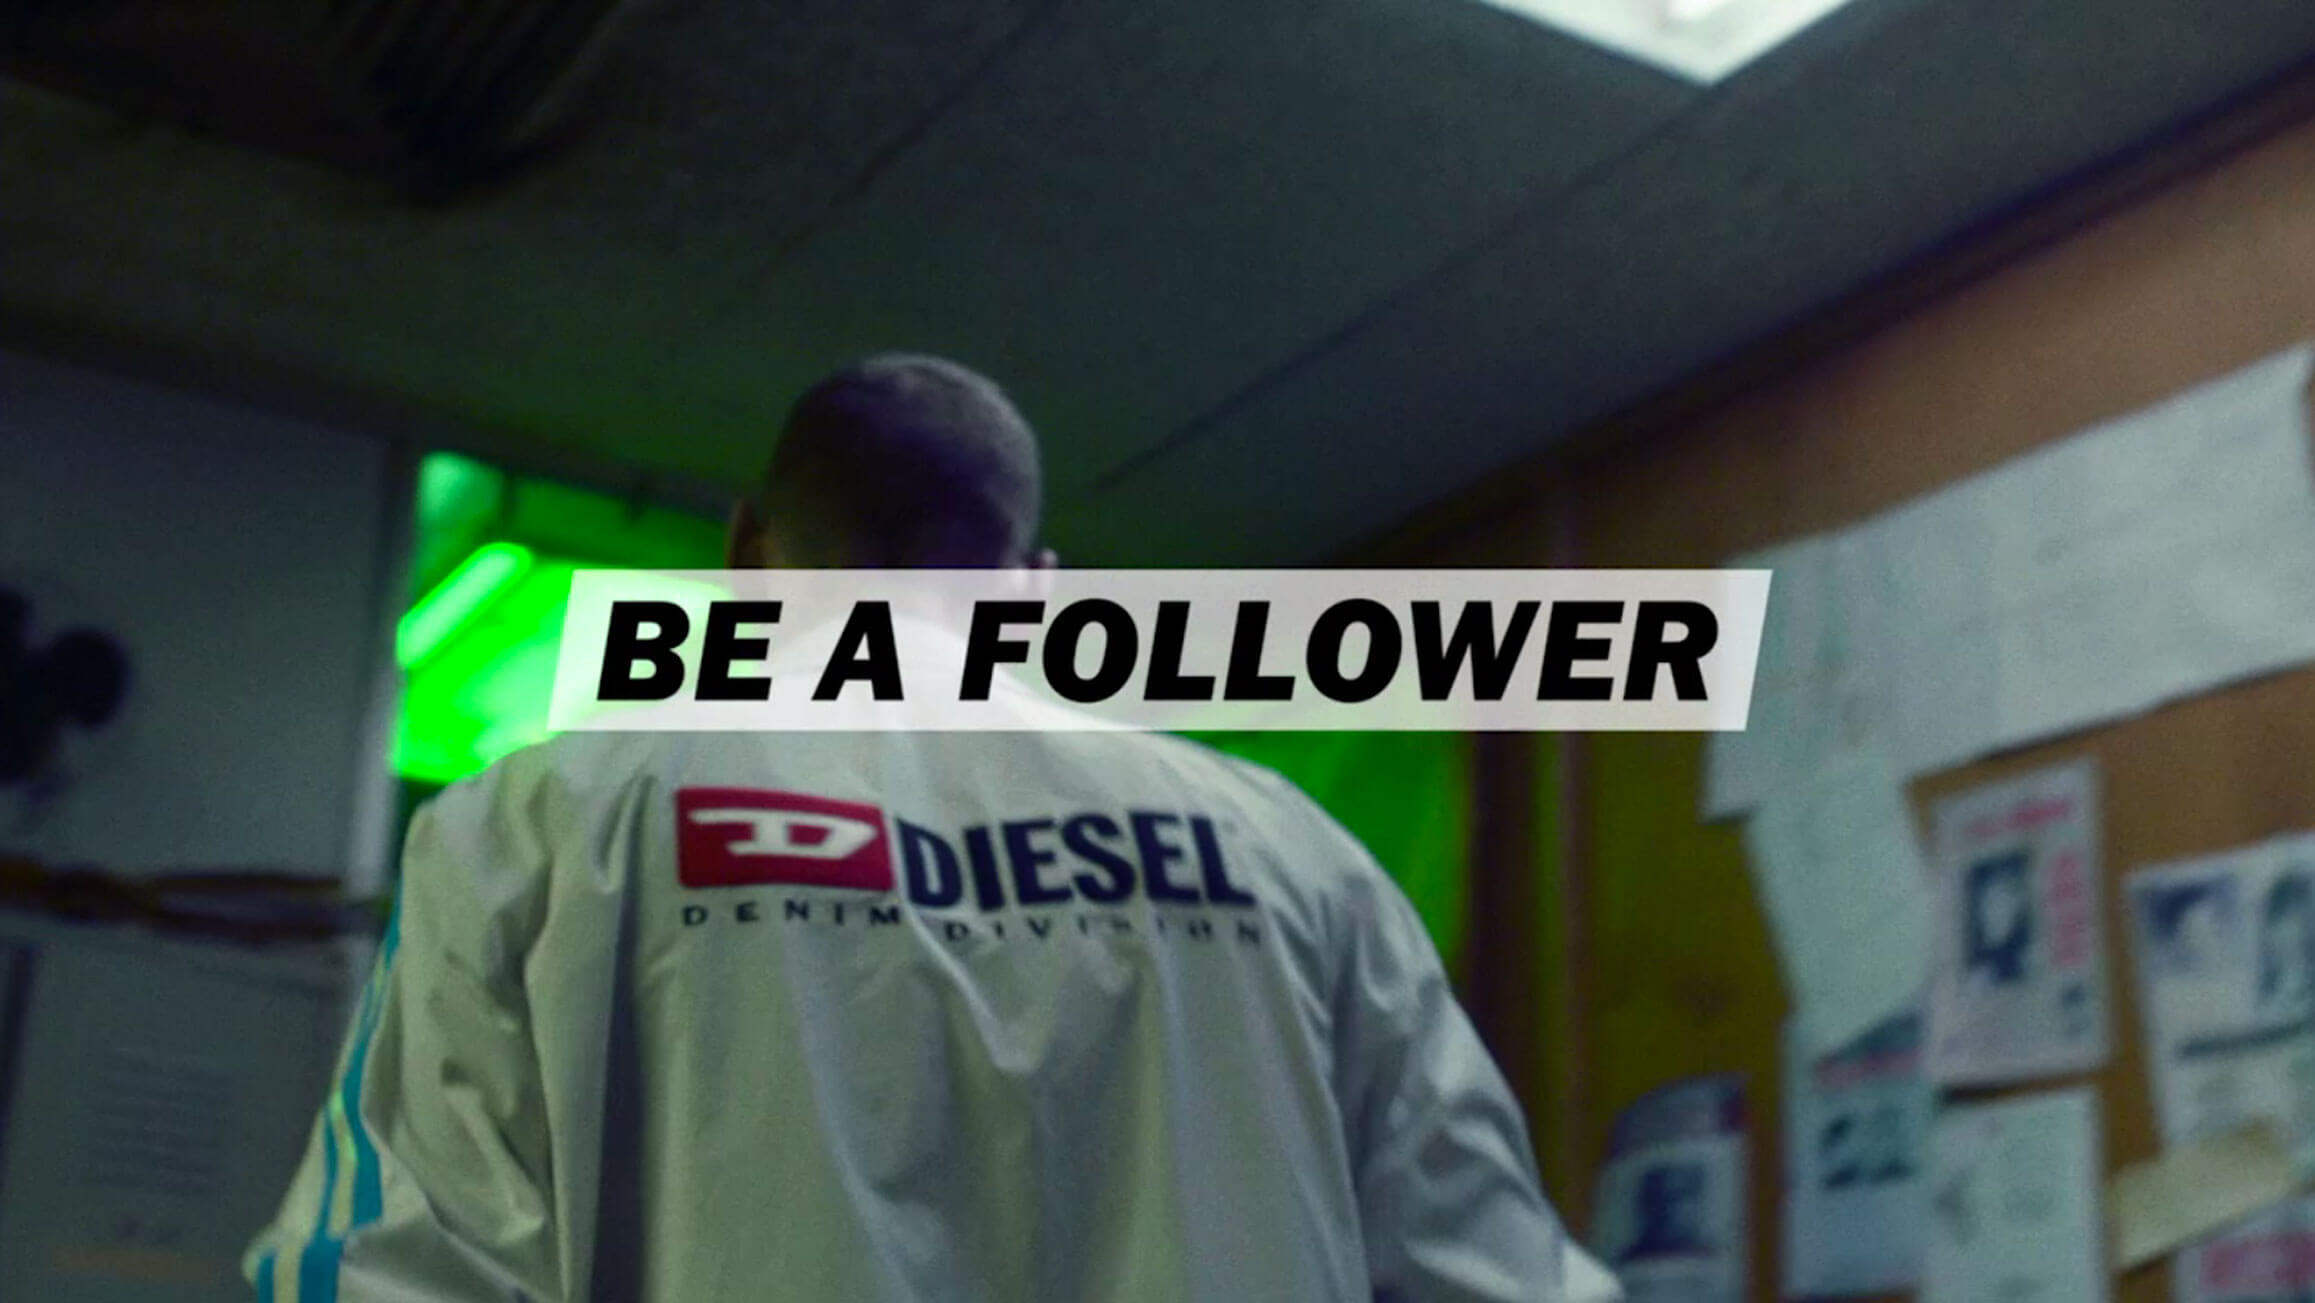 Be a follower! Η Diesel “απαντά” ποιοι είναι οι πραγματικοί influencers στα social media